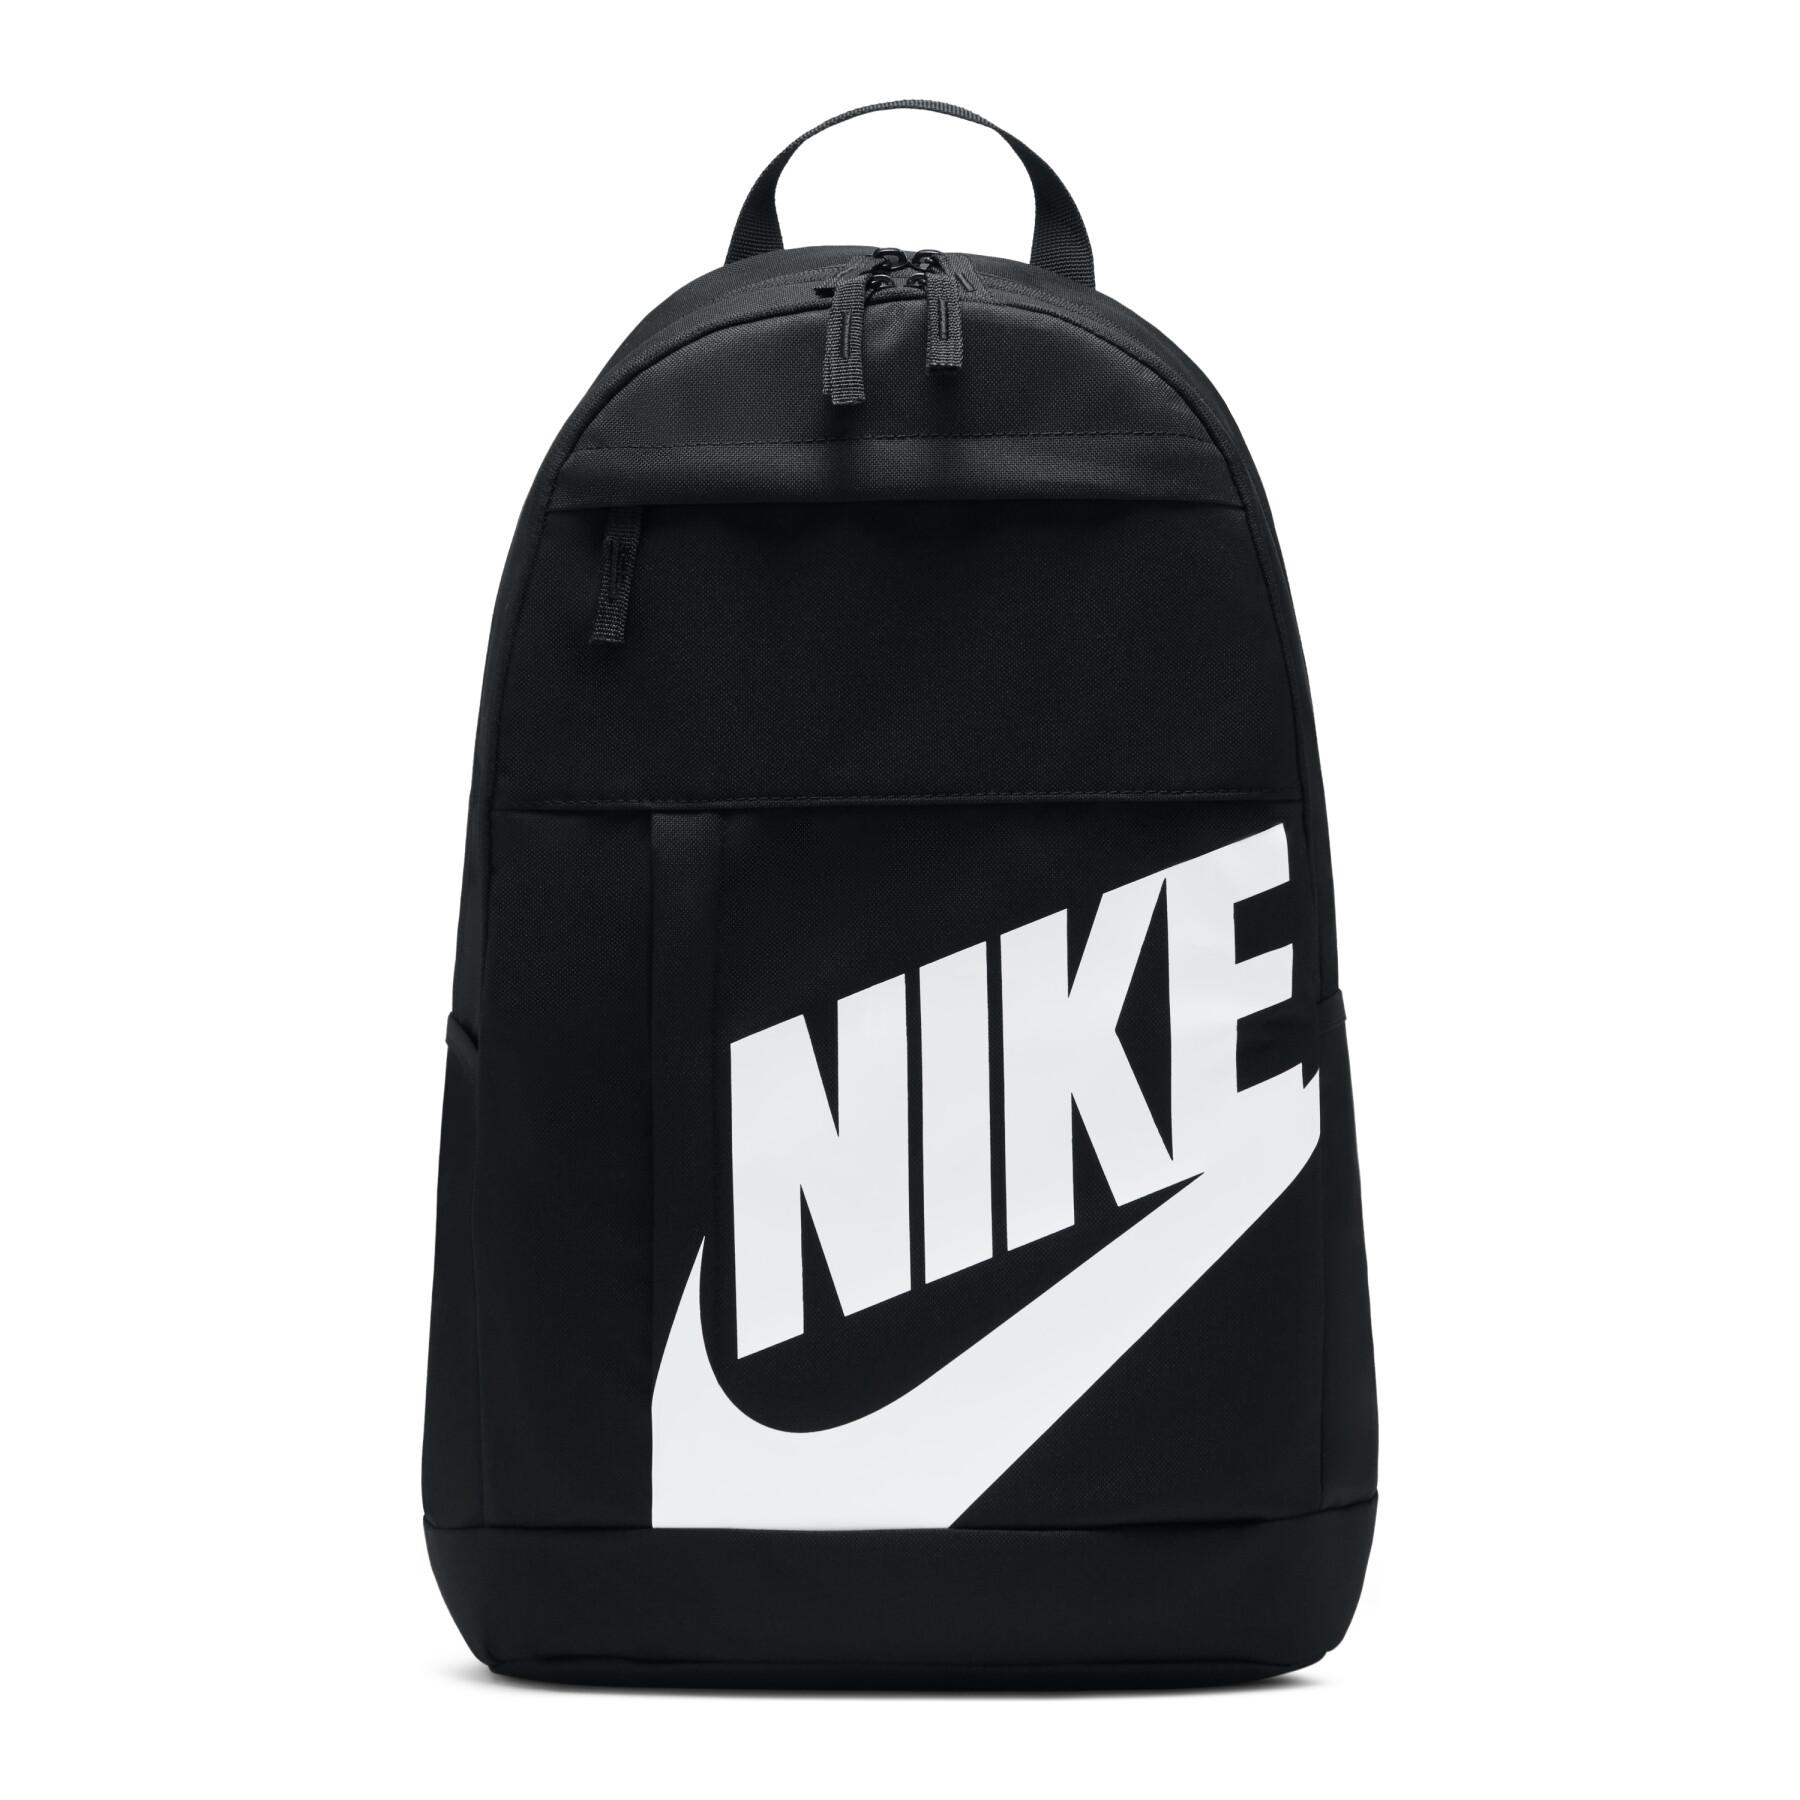 Ryggsäck Nike elemental